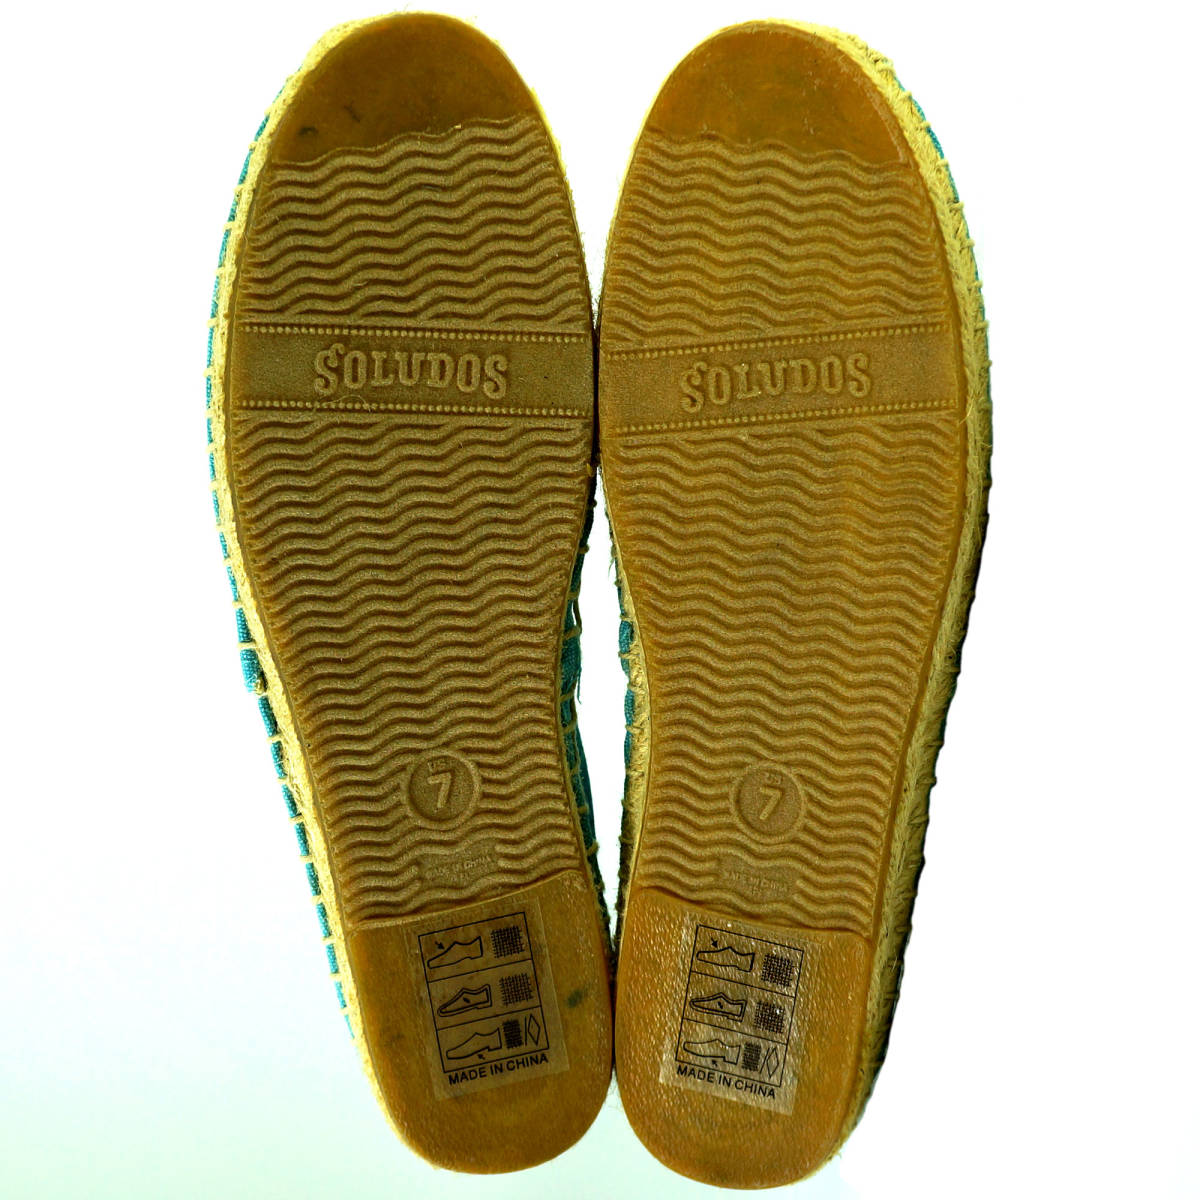 SOLUDOS Dali Espadrilles sandals 7(23.5-24cm) new goods sorudosdali espadrille 